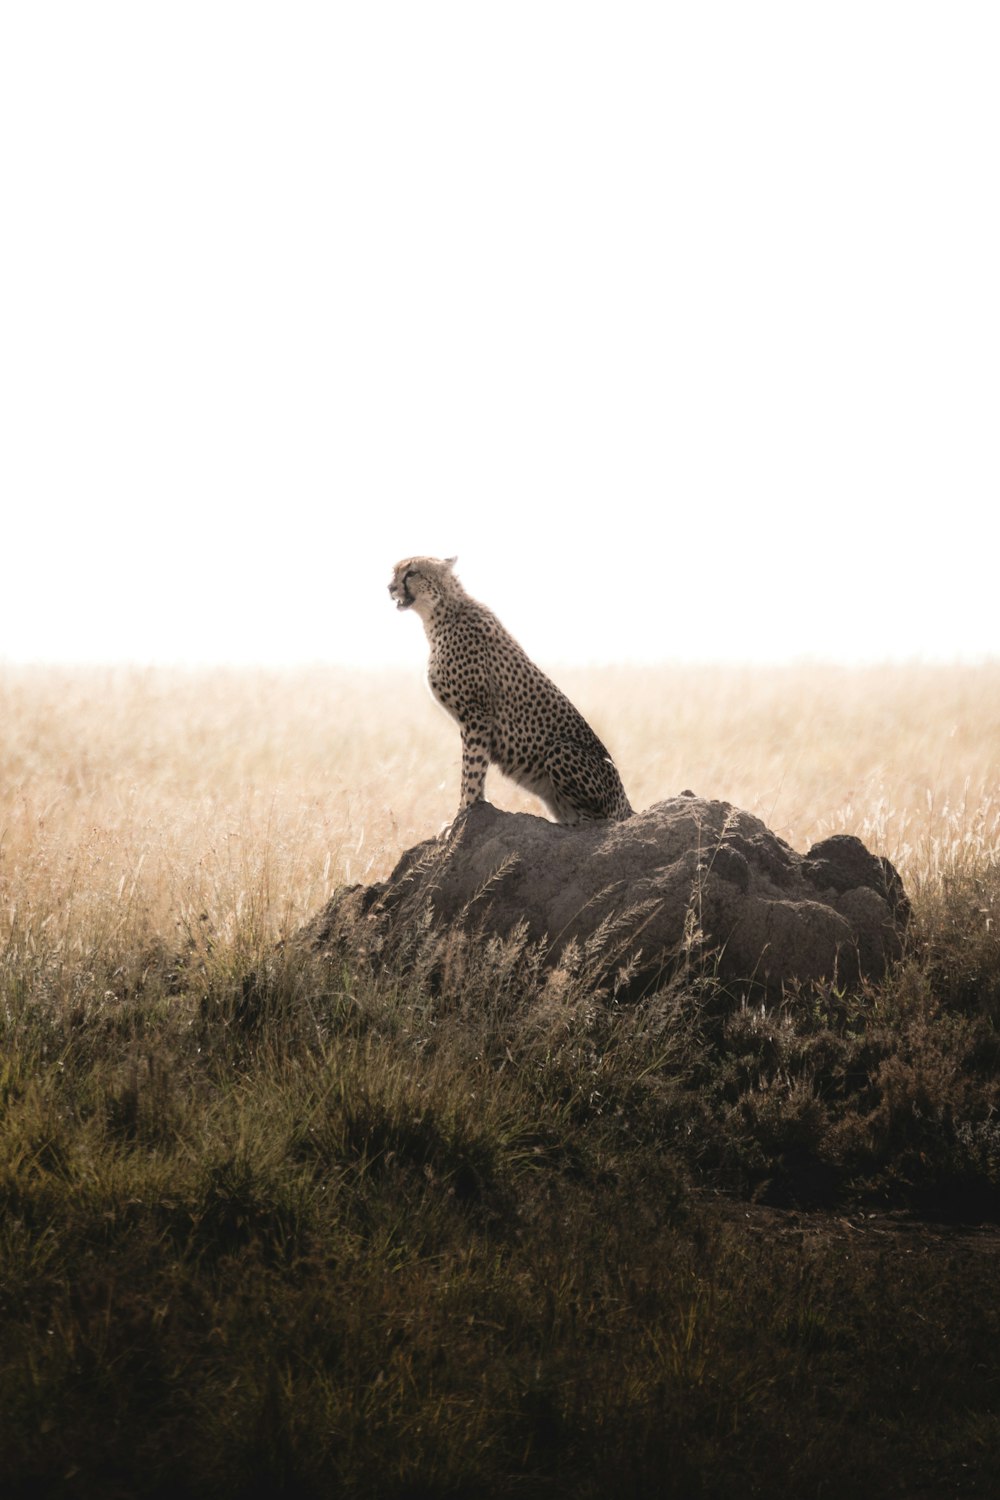 Un ghepardo in piedi su una roccia in un campo